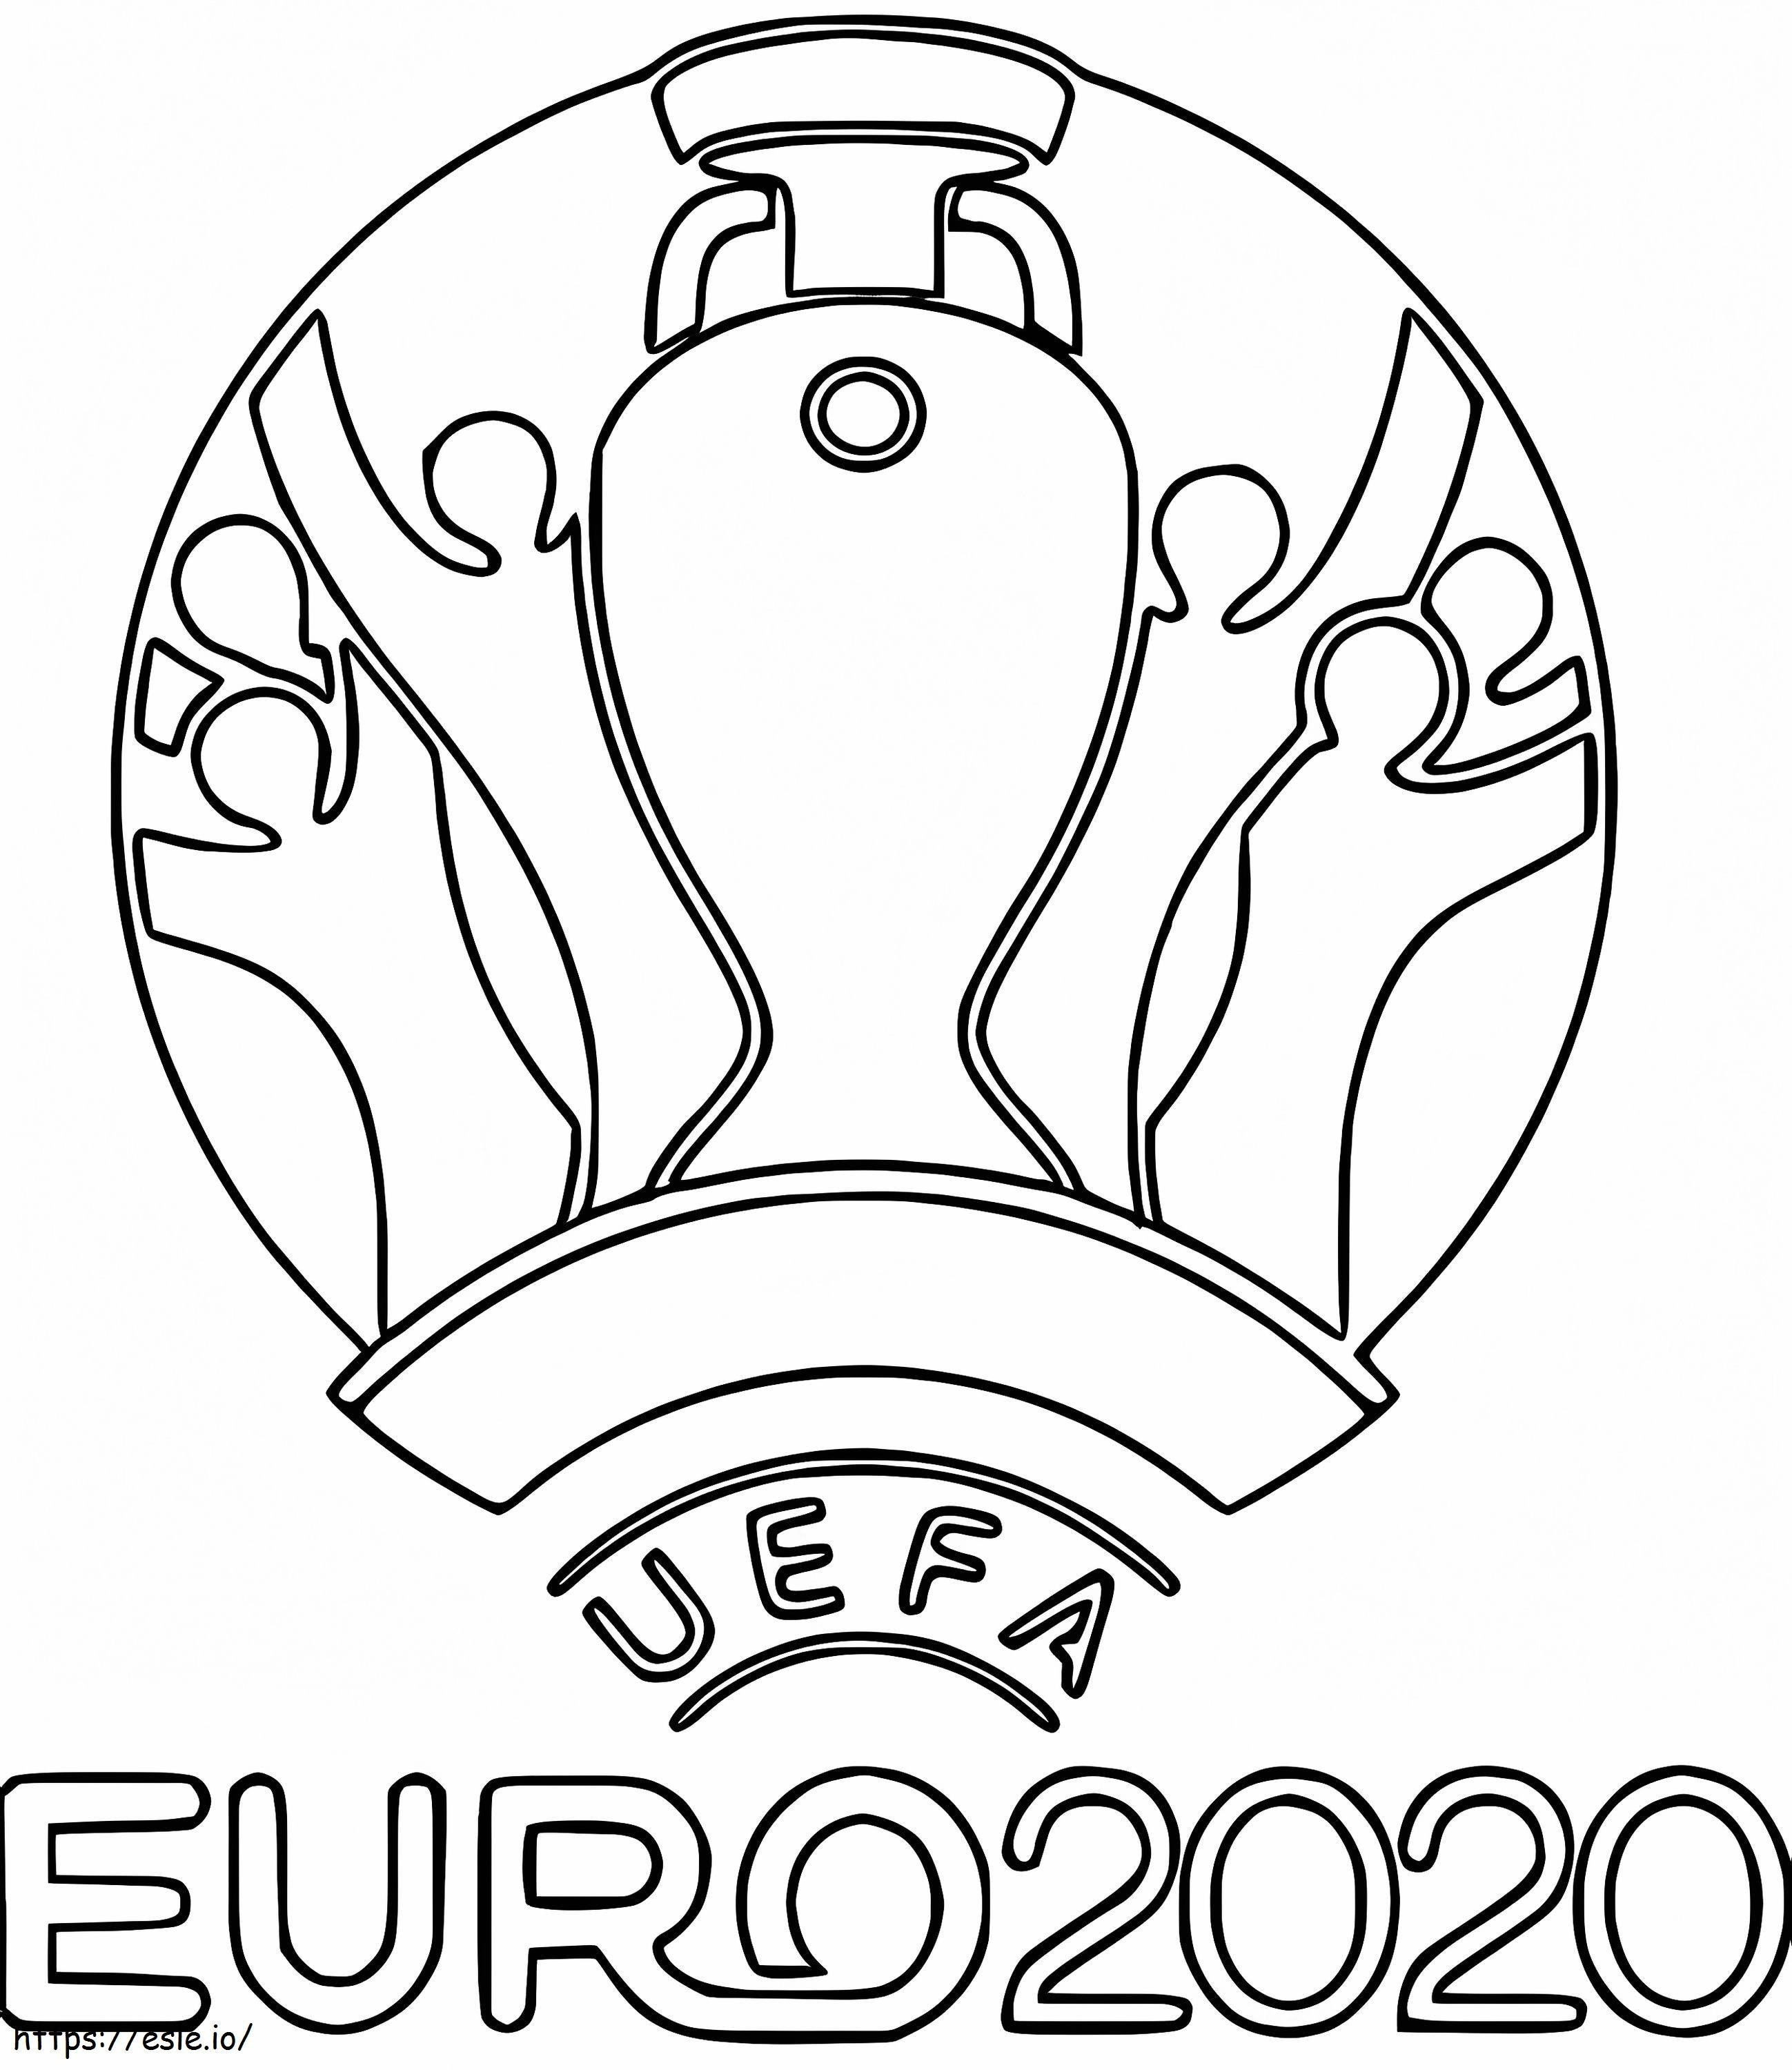 Euro 2020 2021 kleurplaat kleurplaat